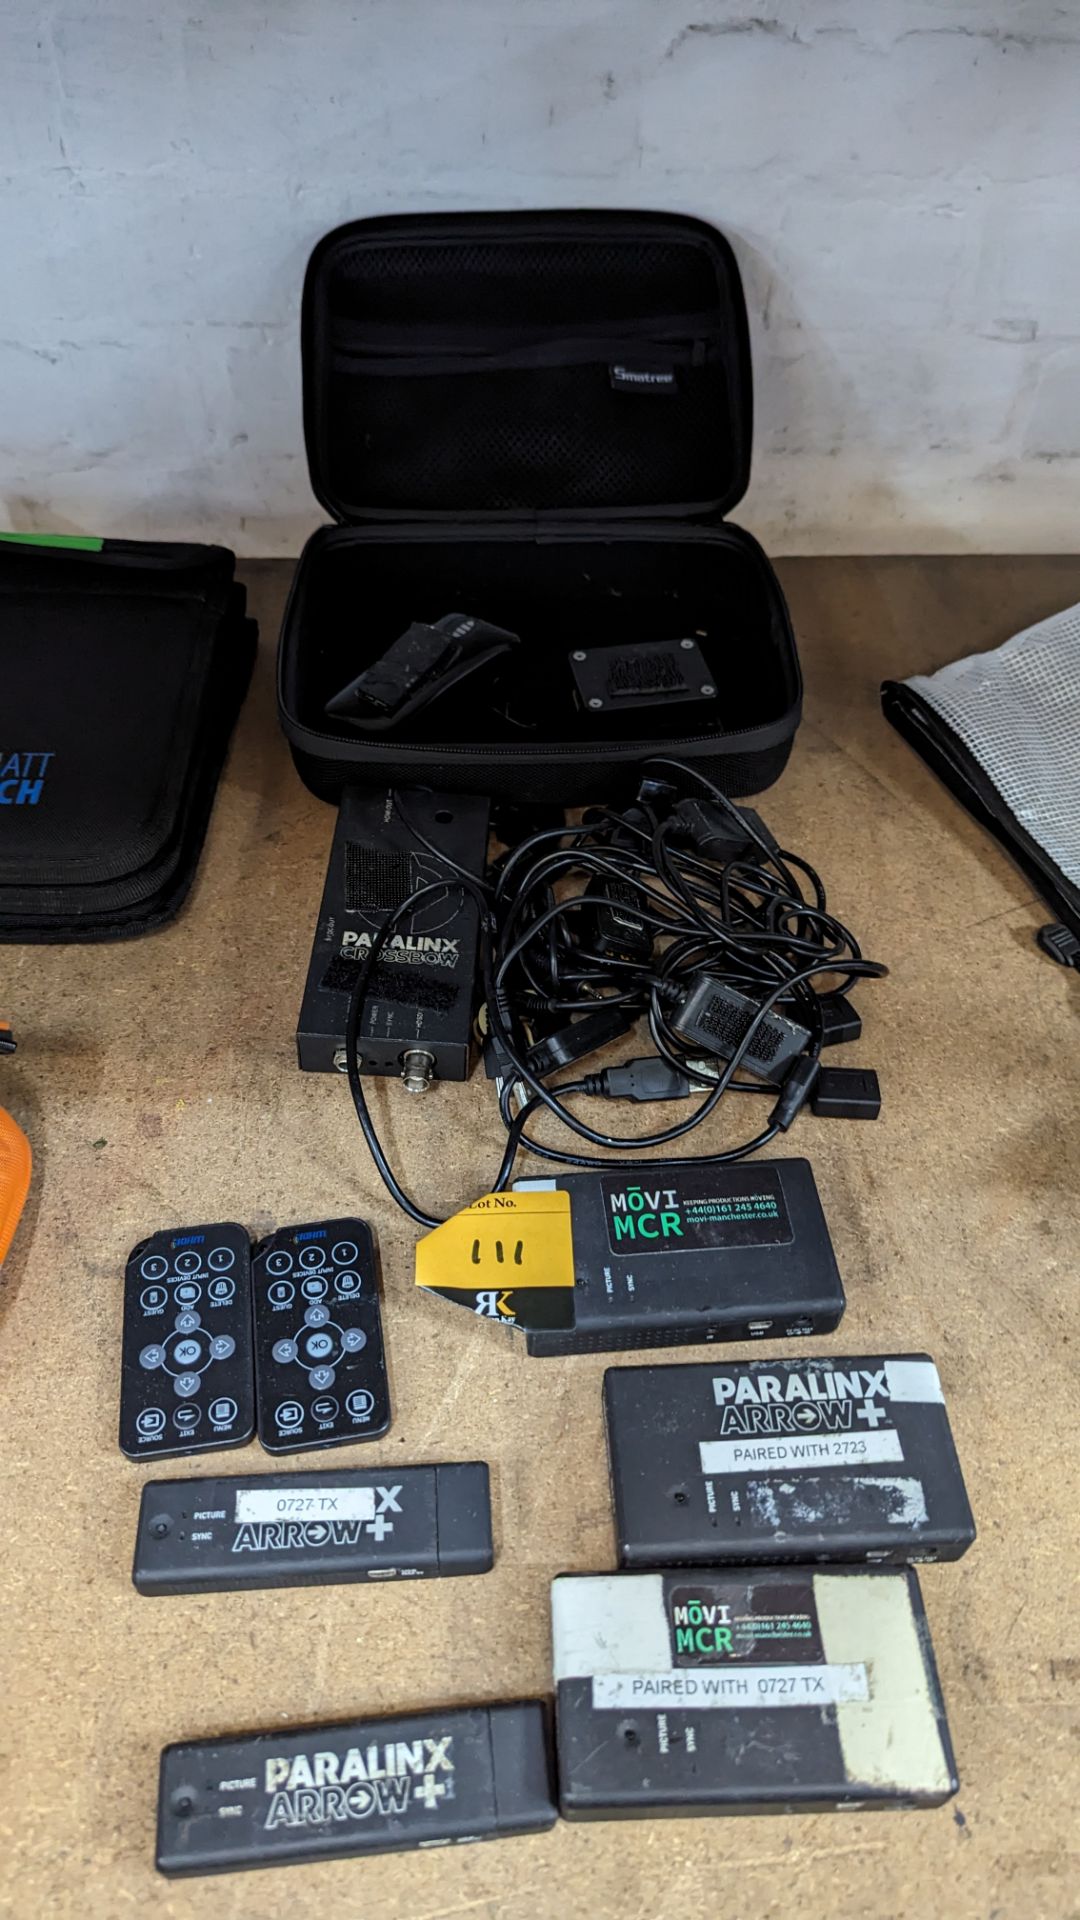 Paralinx Arrow wireless video kit